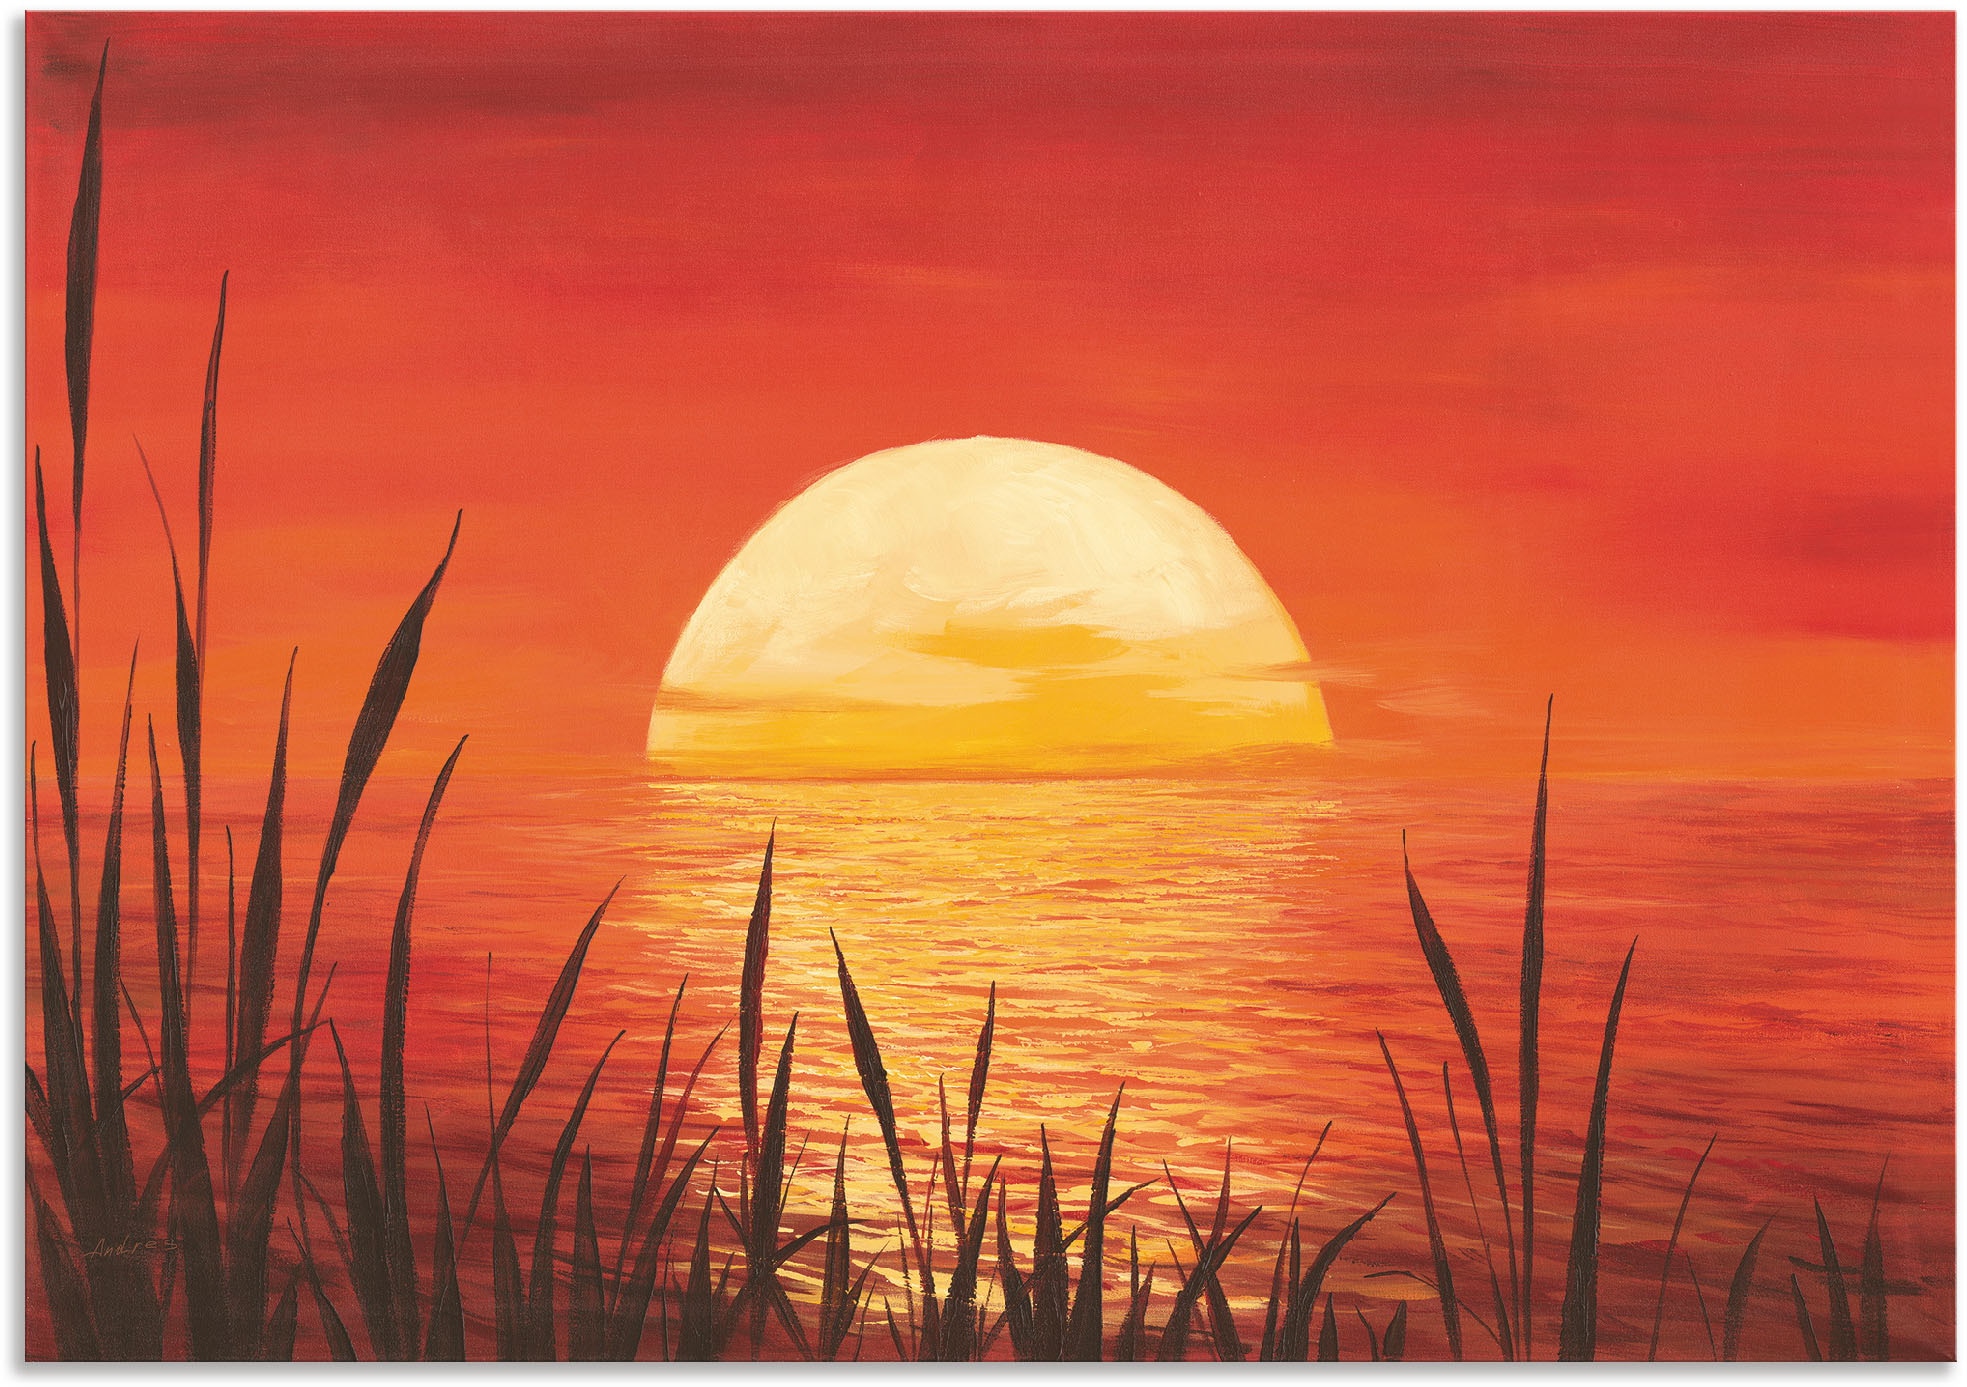 Artland Wandbild »Roter Sonnenuntergang am Ozean«, Bilder vom Sonnenuntergang & -aufgang (1 Stück), in vielen Grössen & Produktarten - Alubild / Outdoorbild, Leinwandbild, Poster, Wandaufkleber / Wandtattoo auch für Badezimmer geeignet